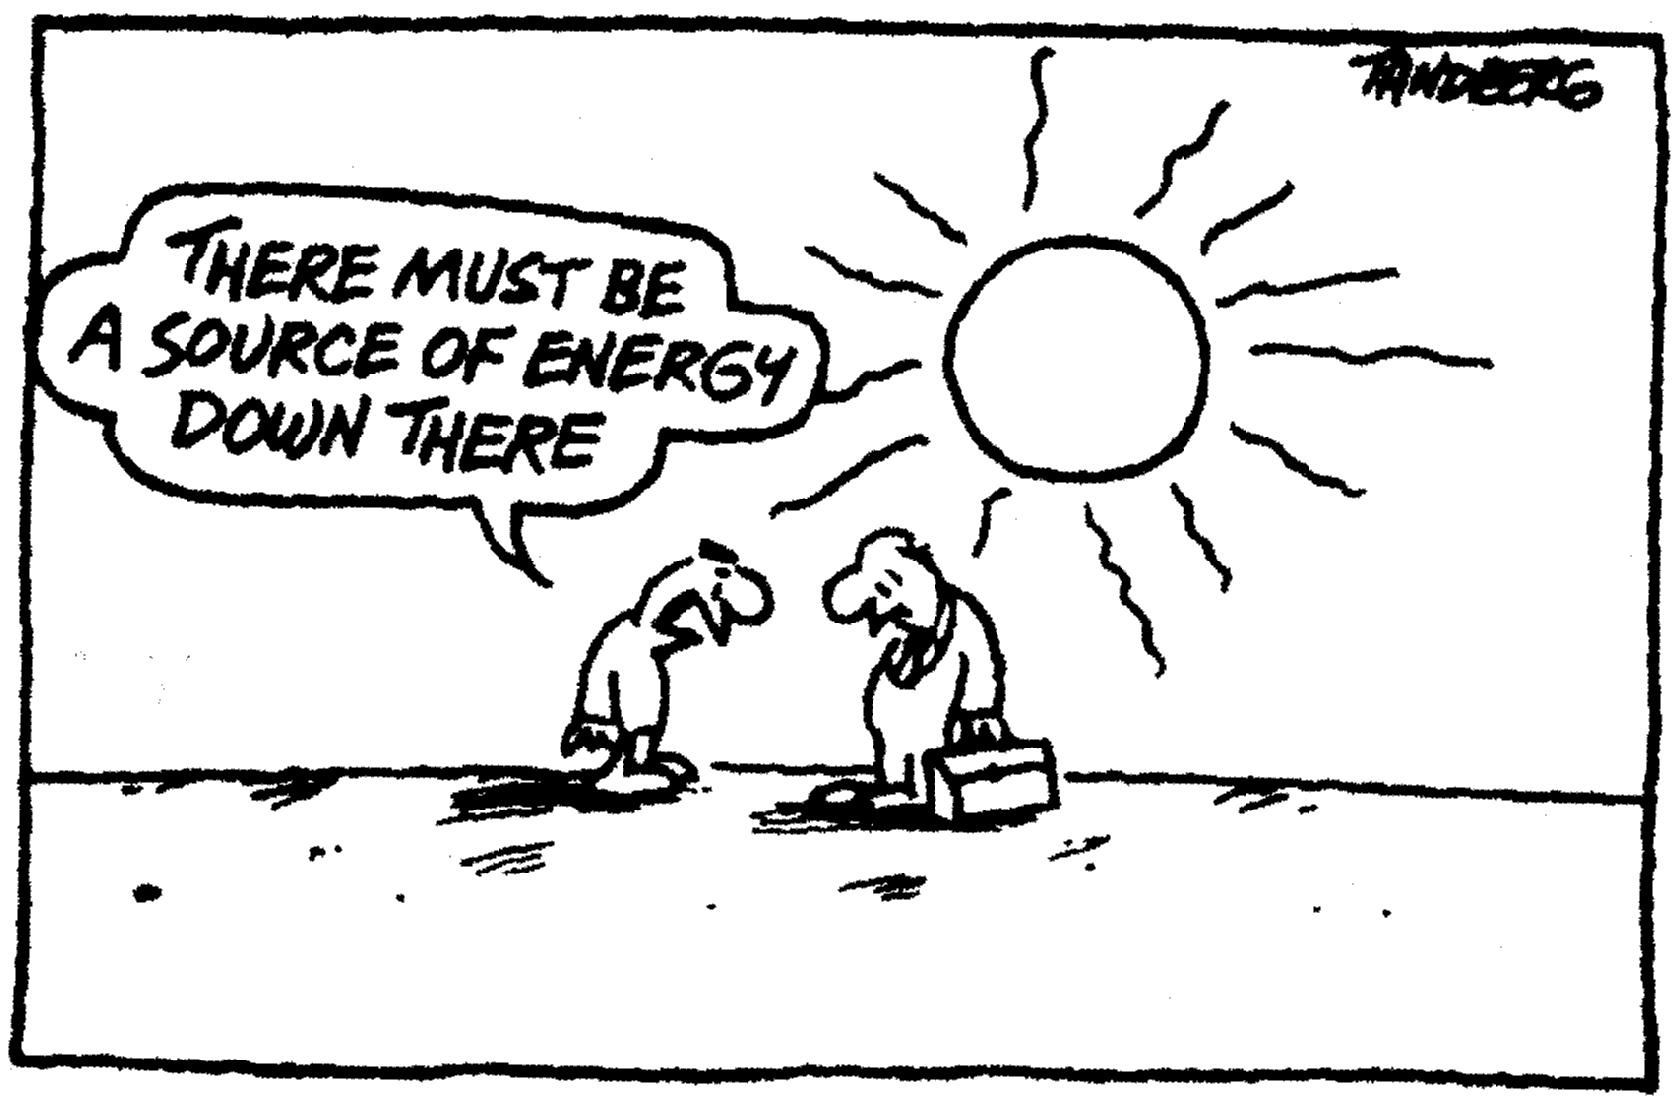 Solar Power cartoon.jpg